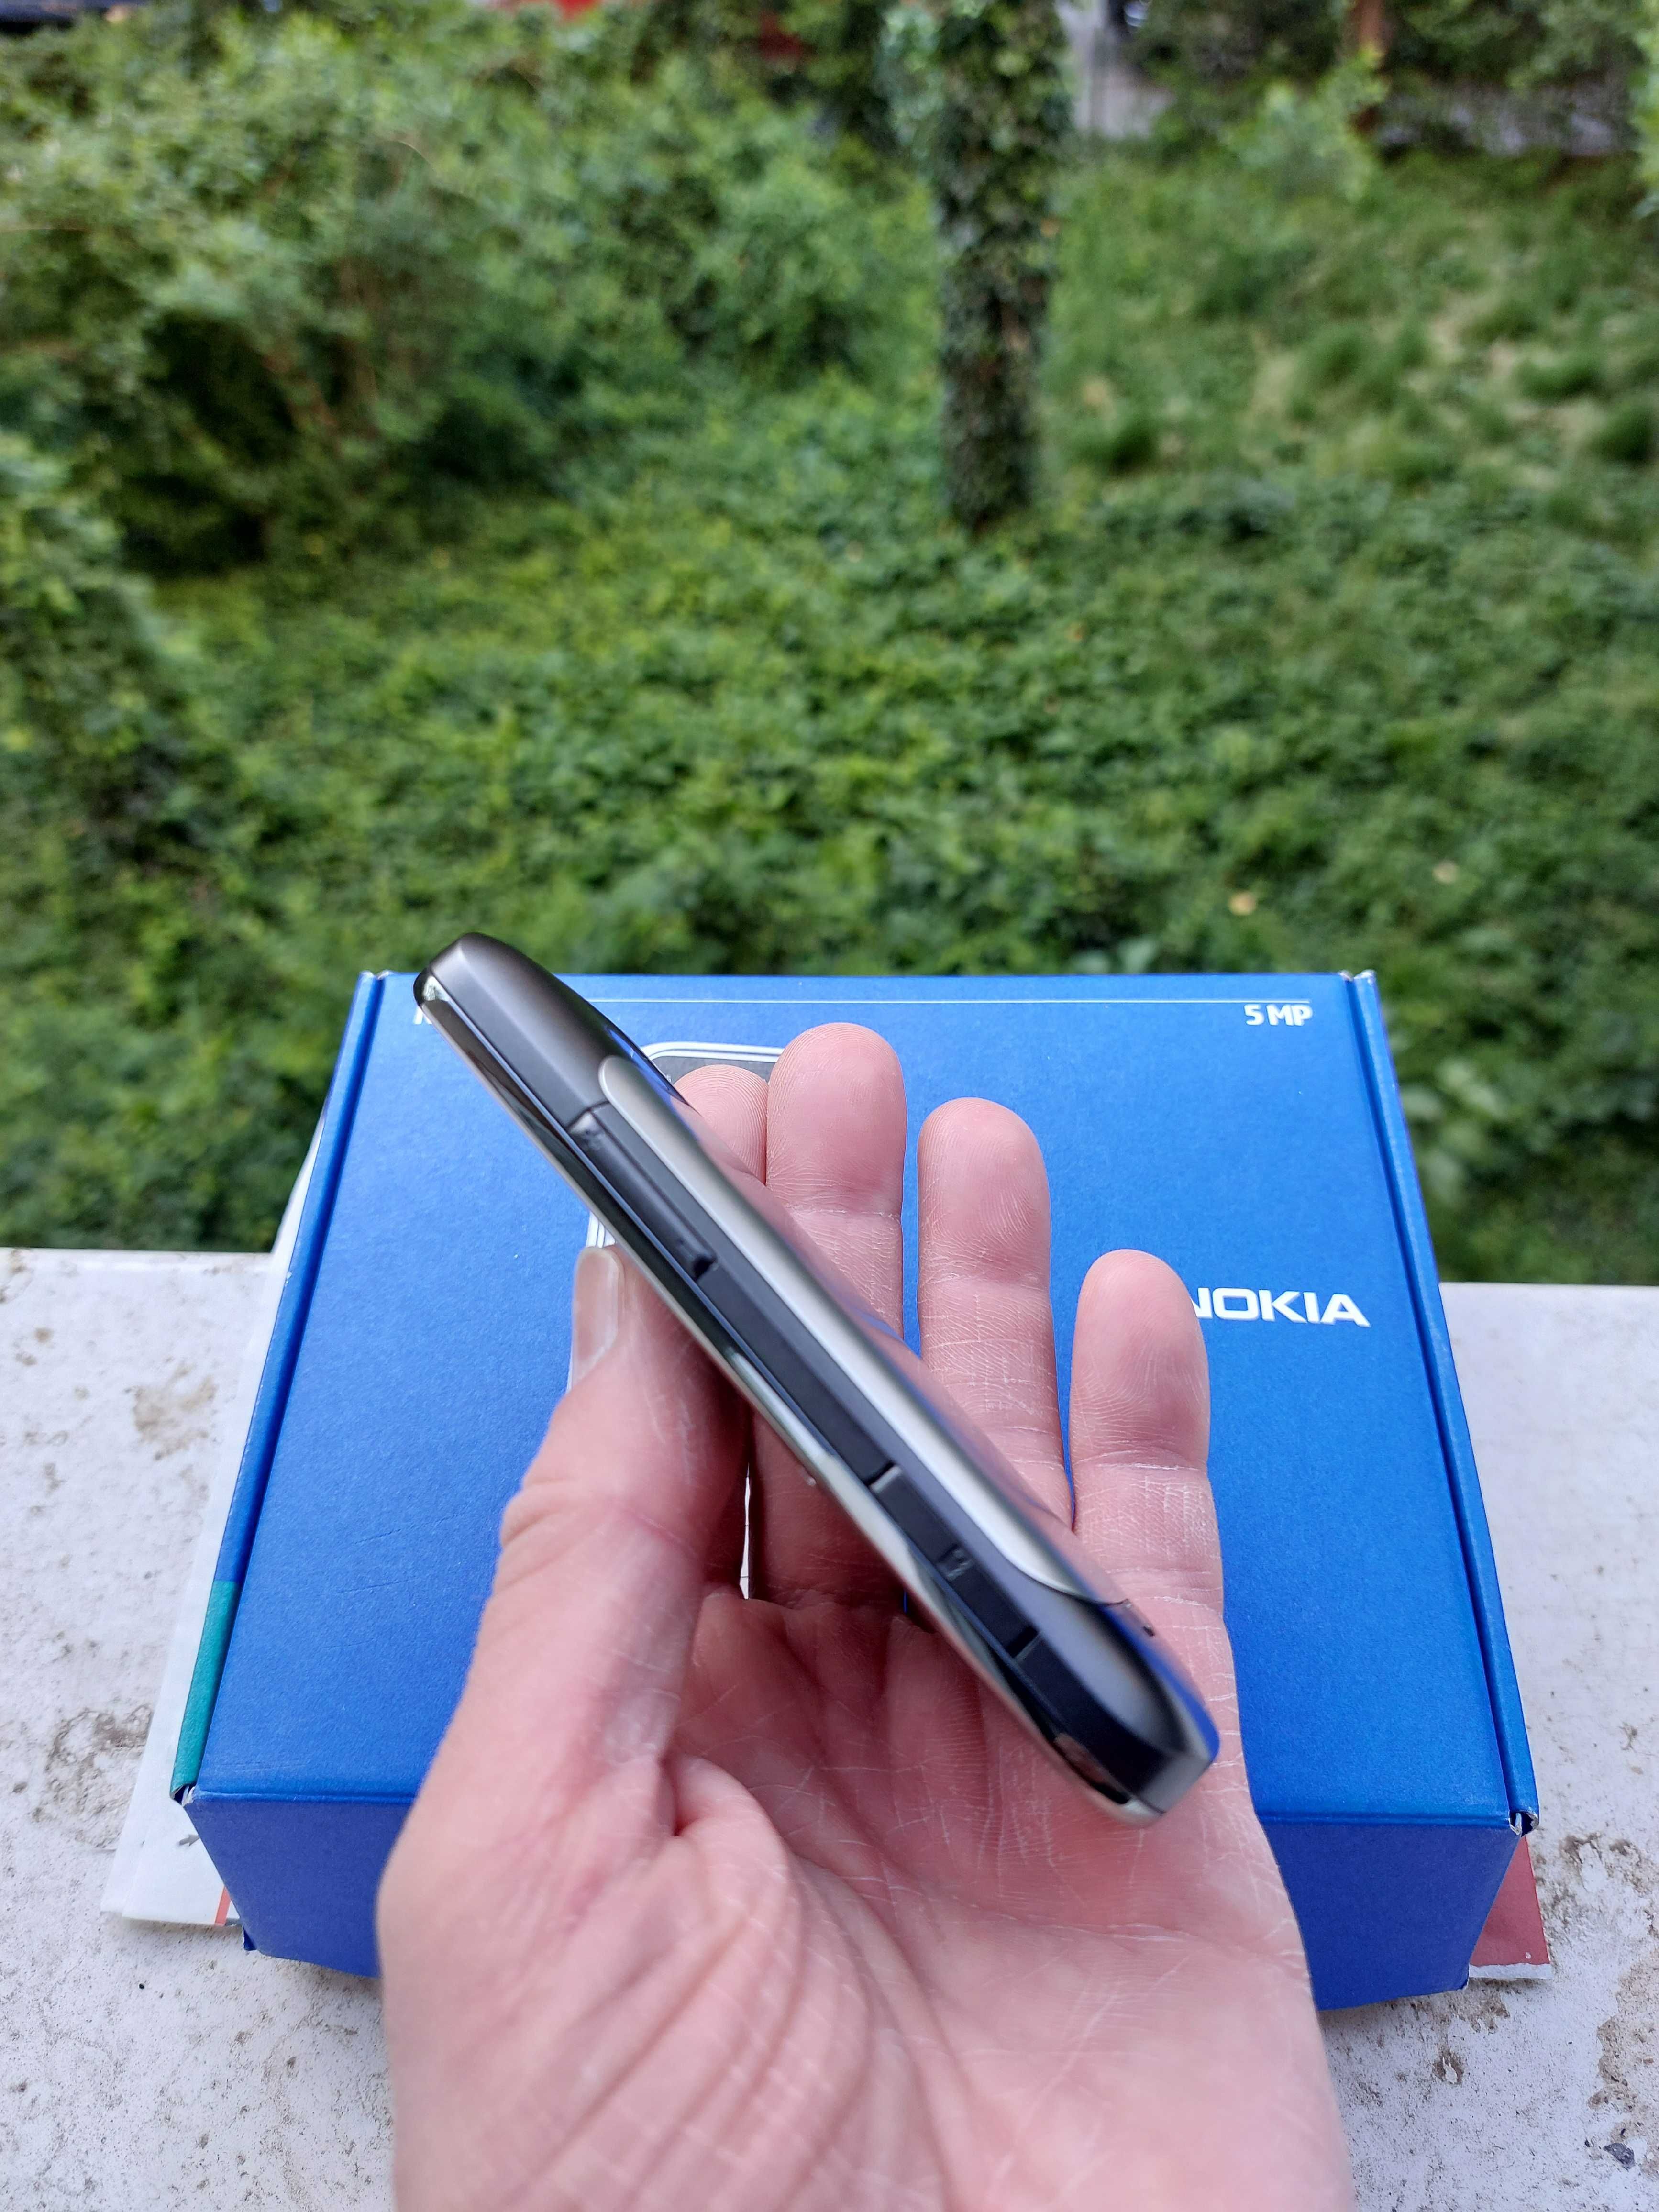 Nokia C5 Nou decodat orig Ungaria la cutie doar 36 min vorbit pe el